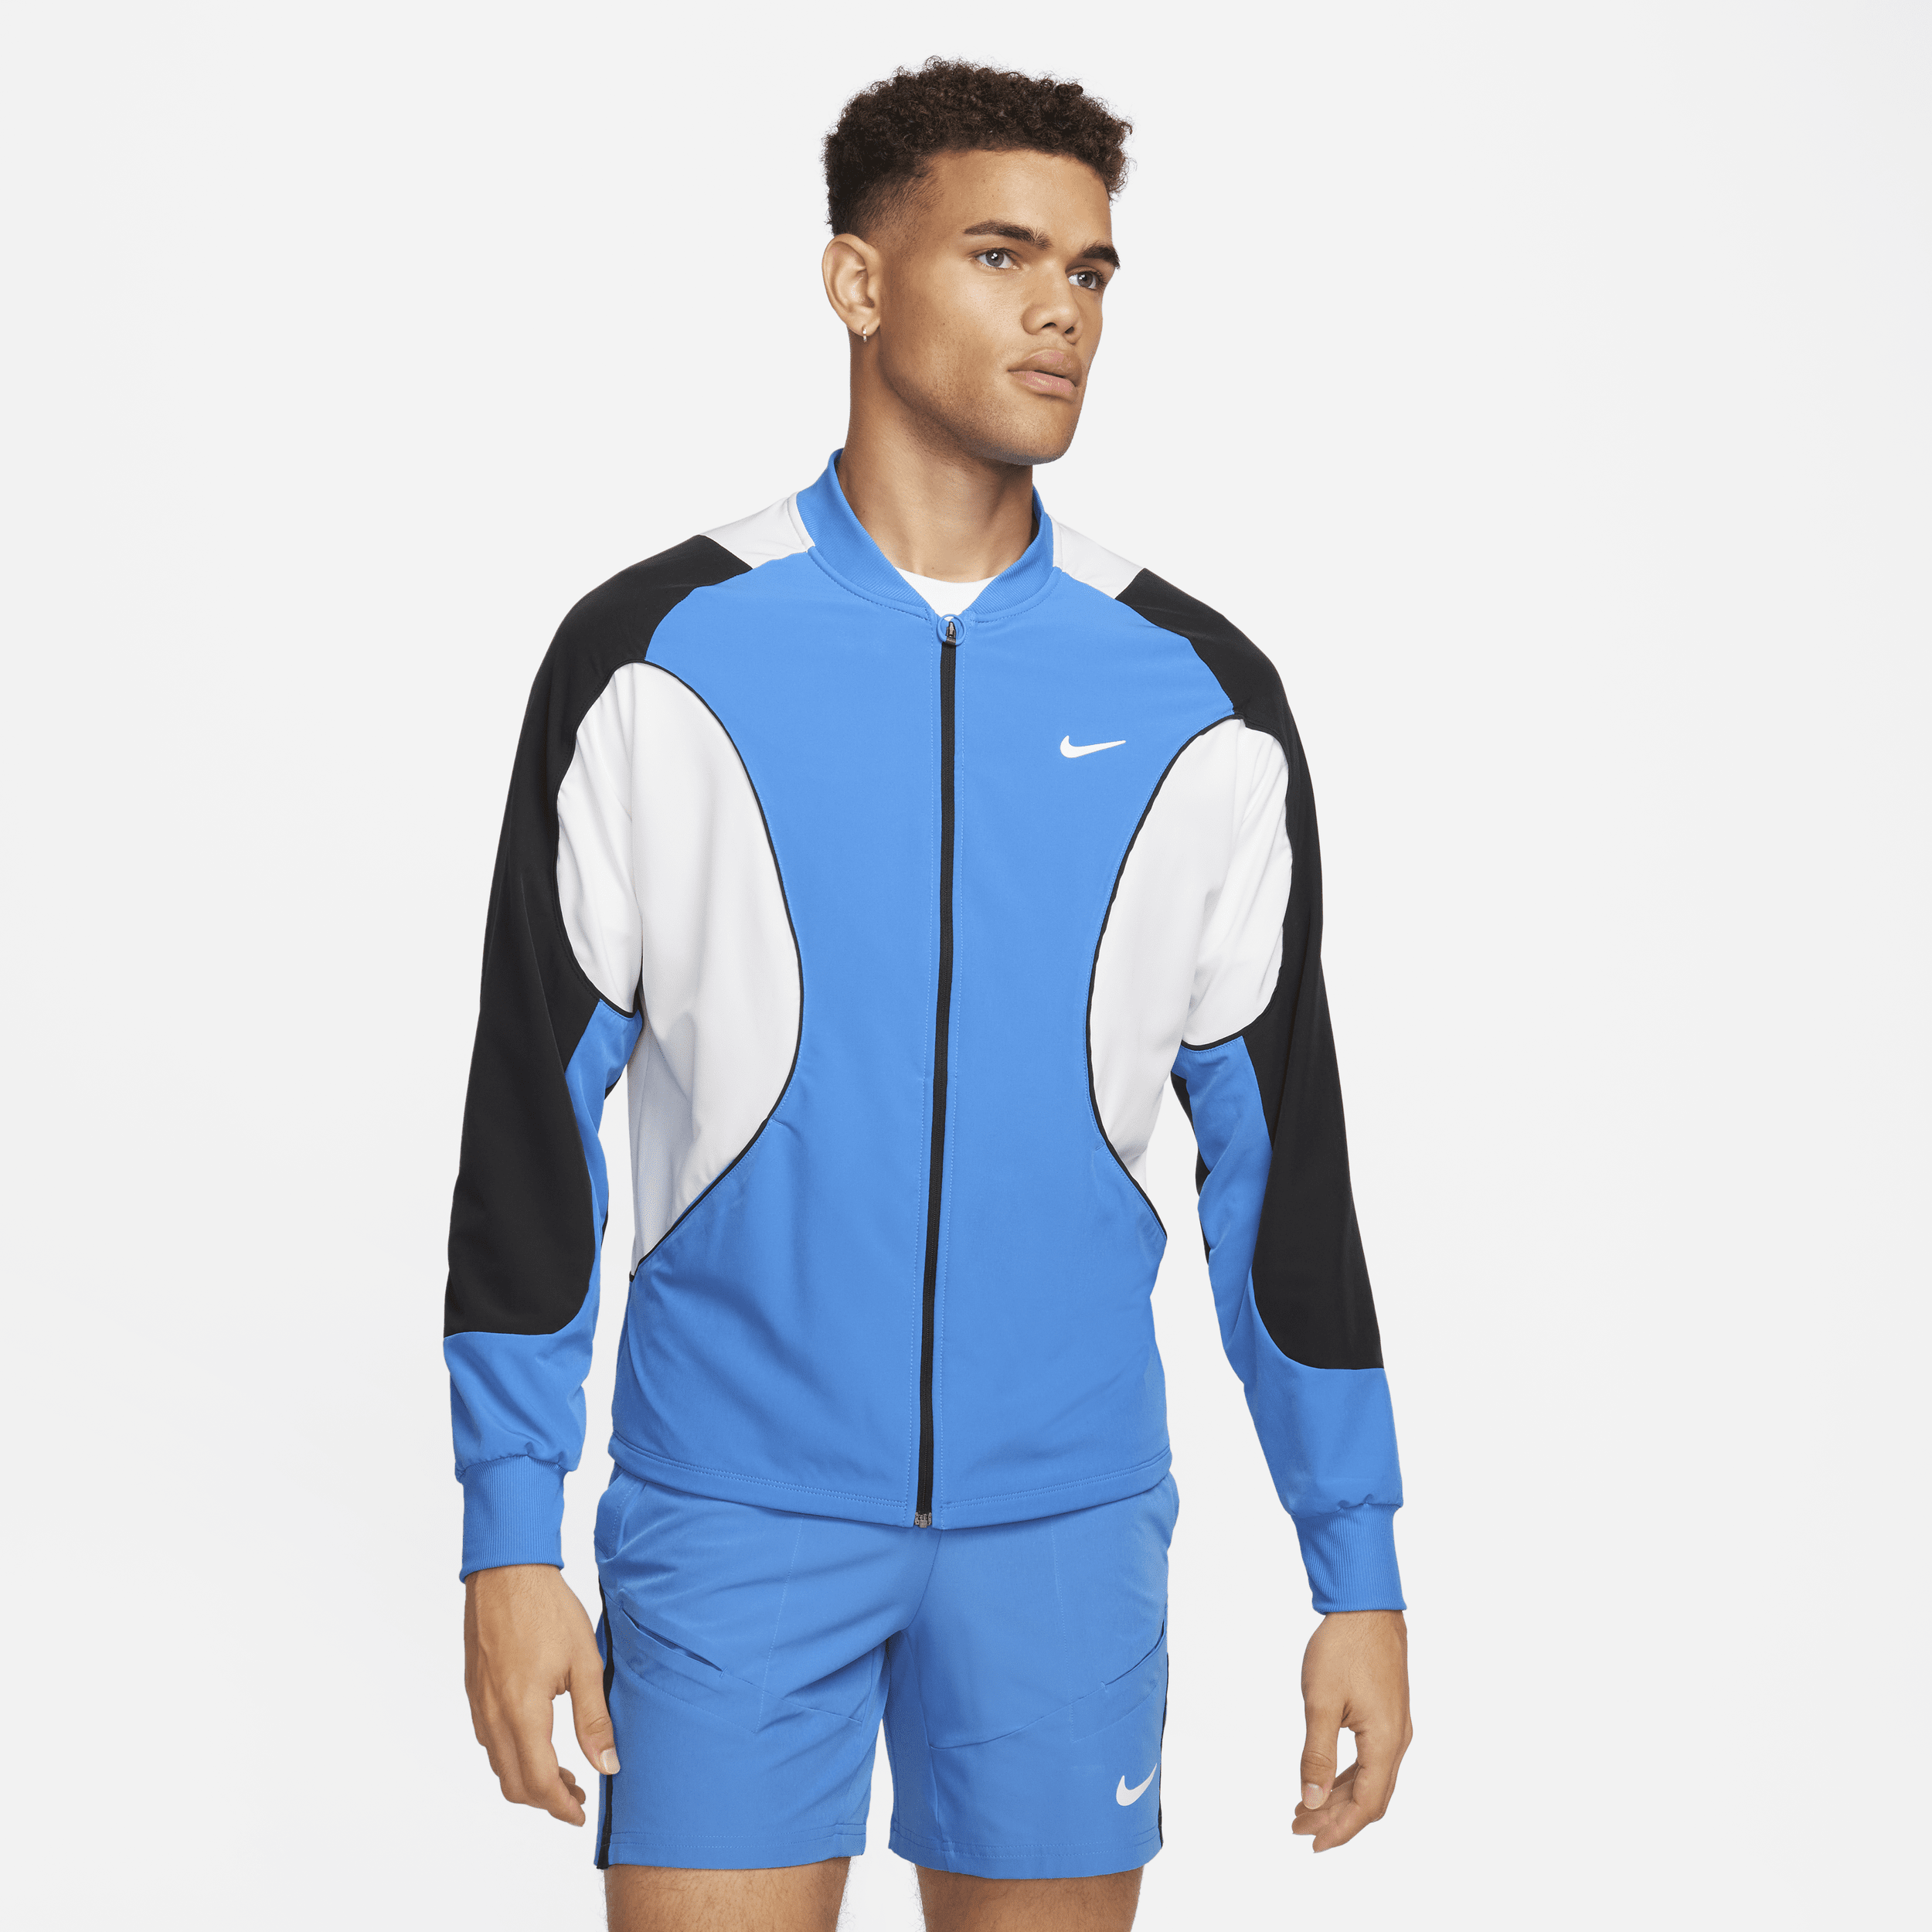 Nike Men's Court Advantage Dri-fit Tennis Jacket In Blue